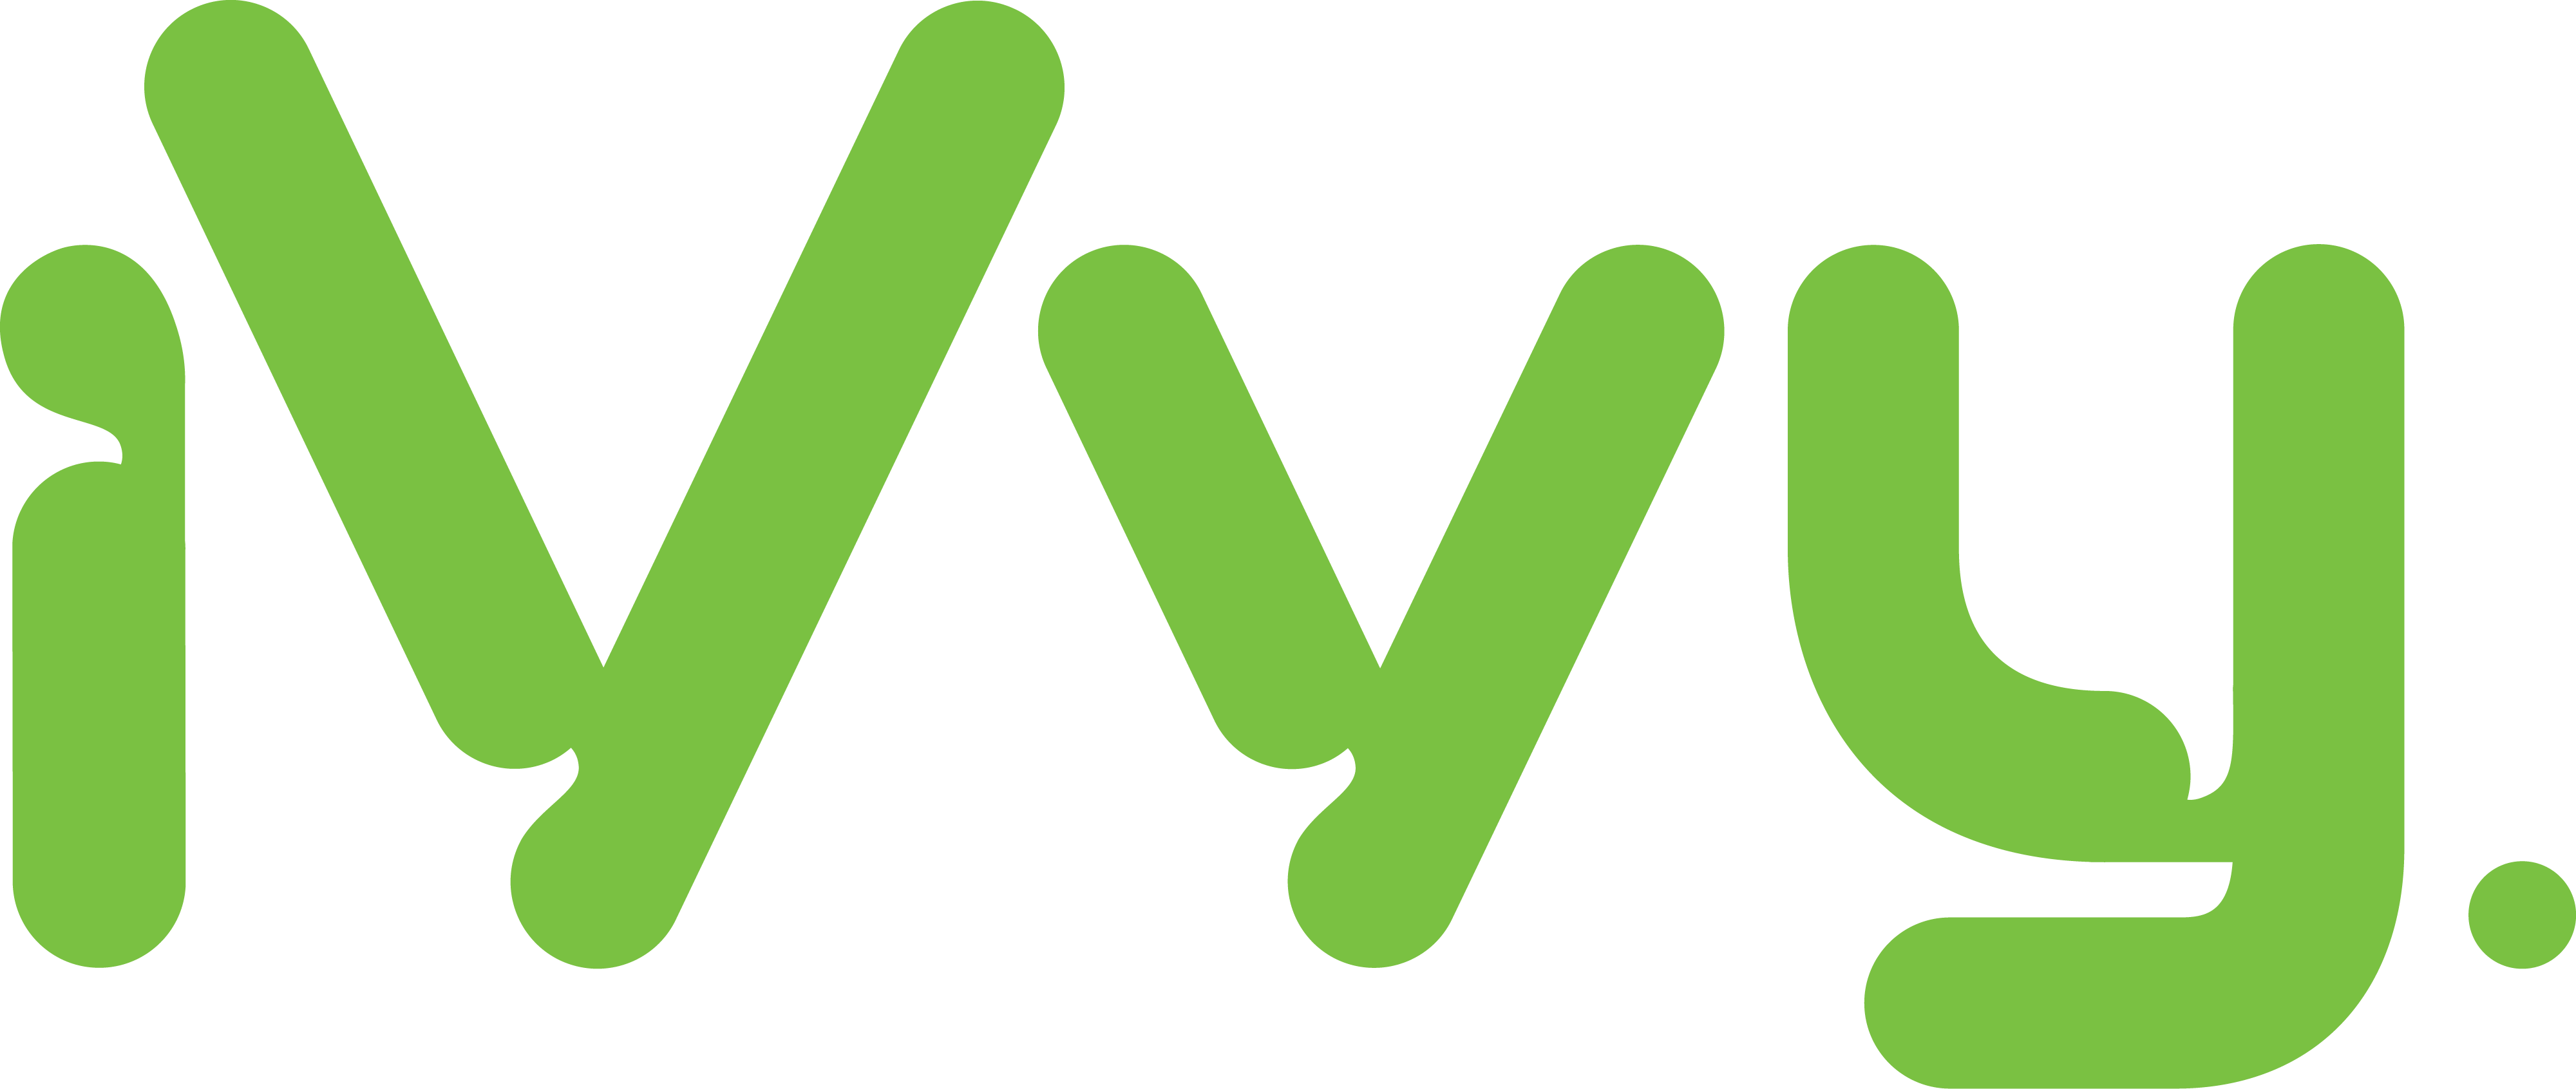 iVvy 2021 - logo Green (1)